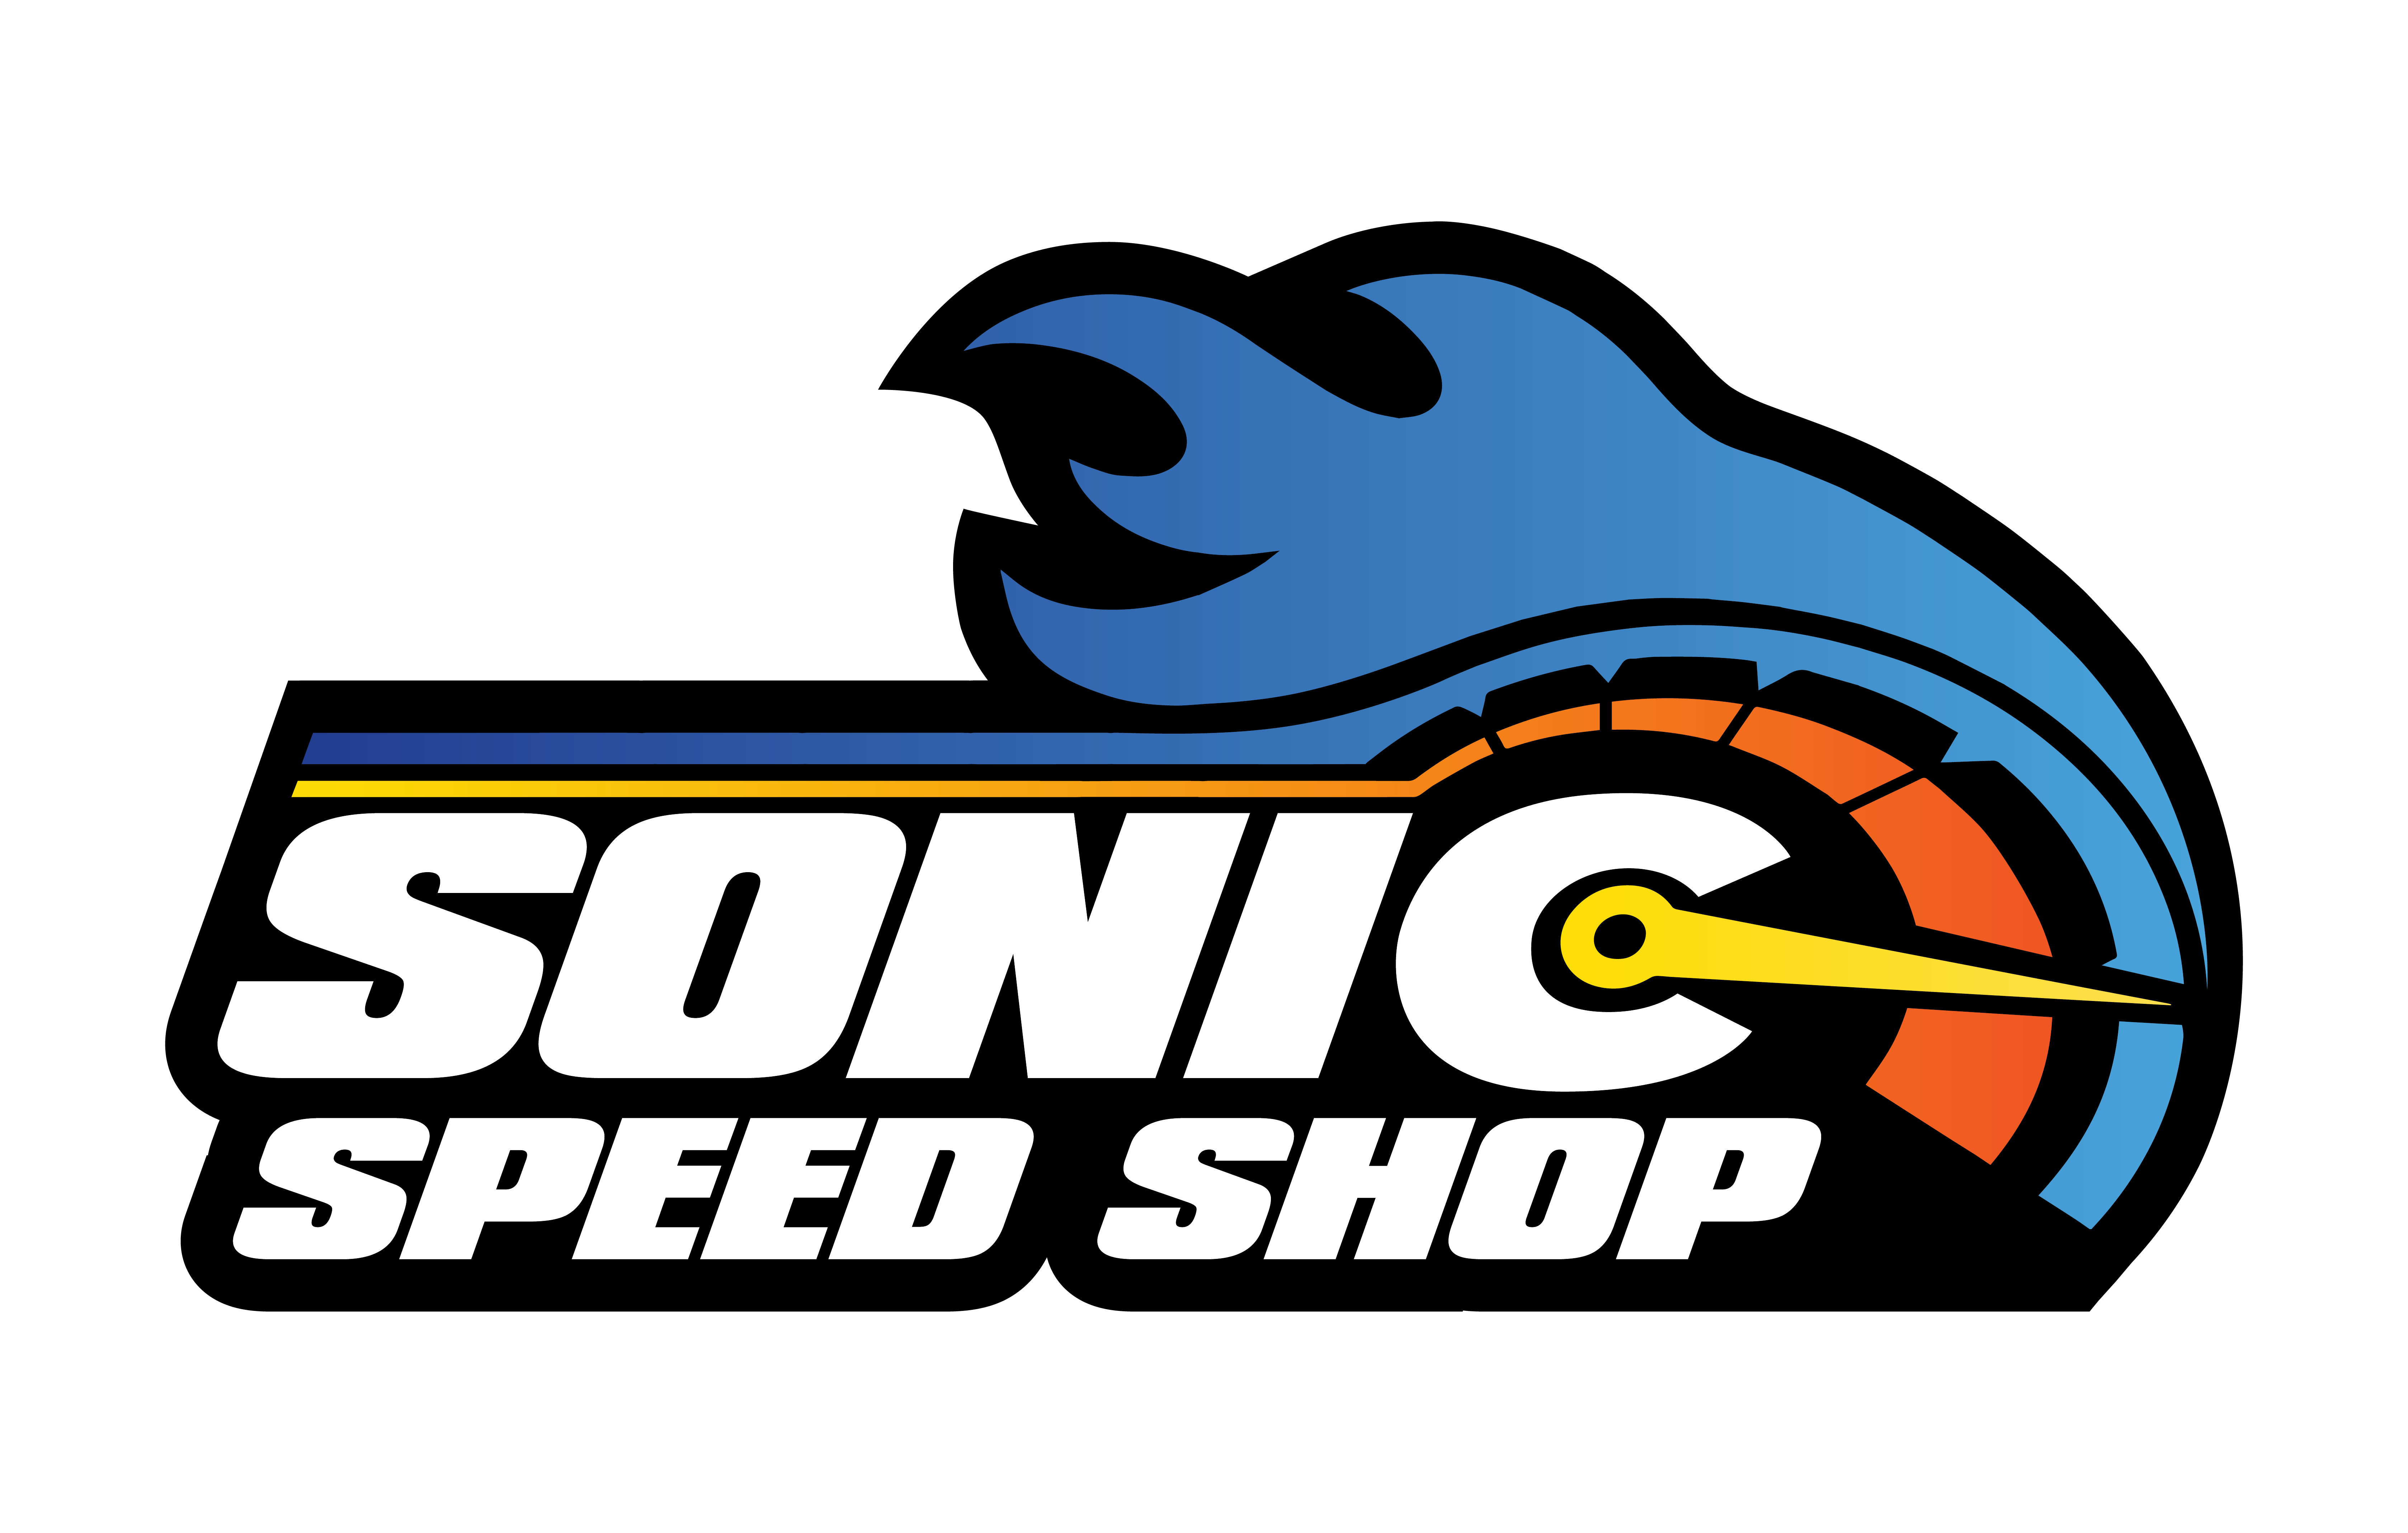 sonic shop logo